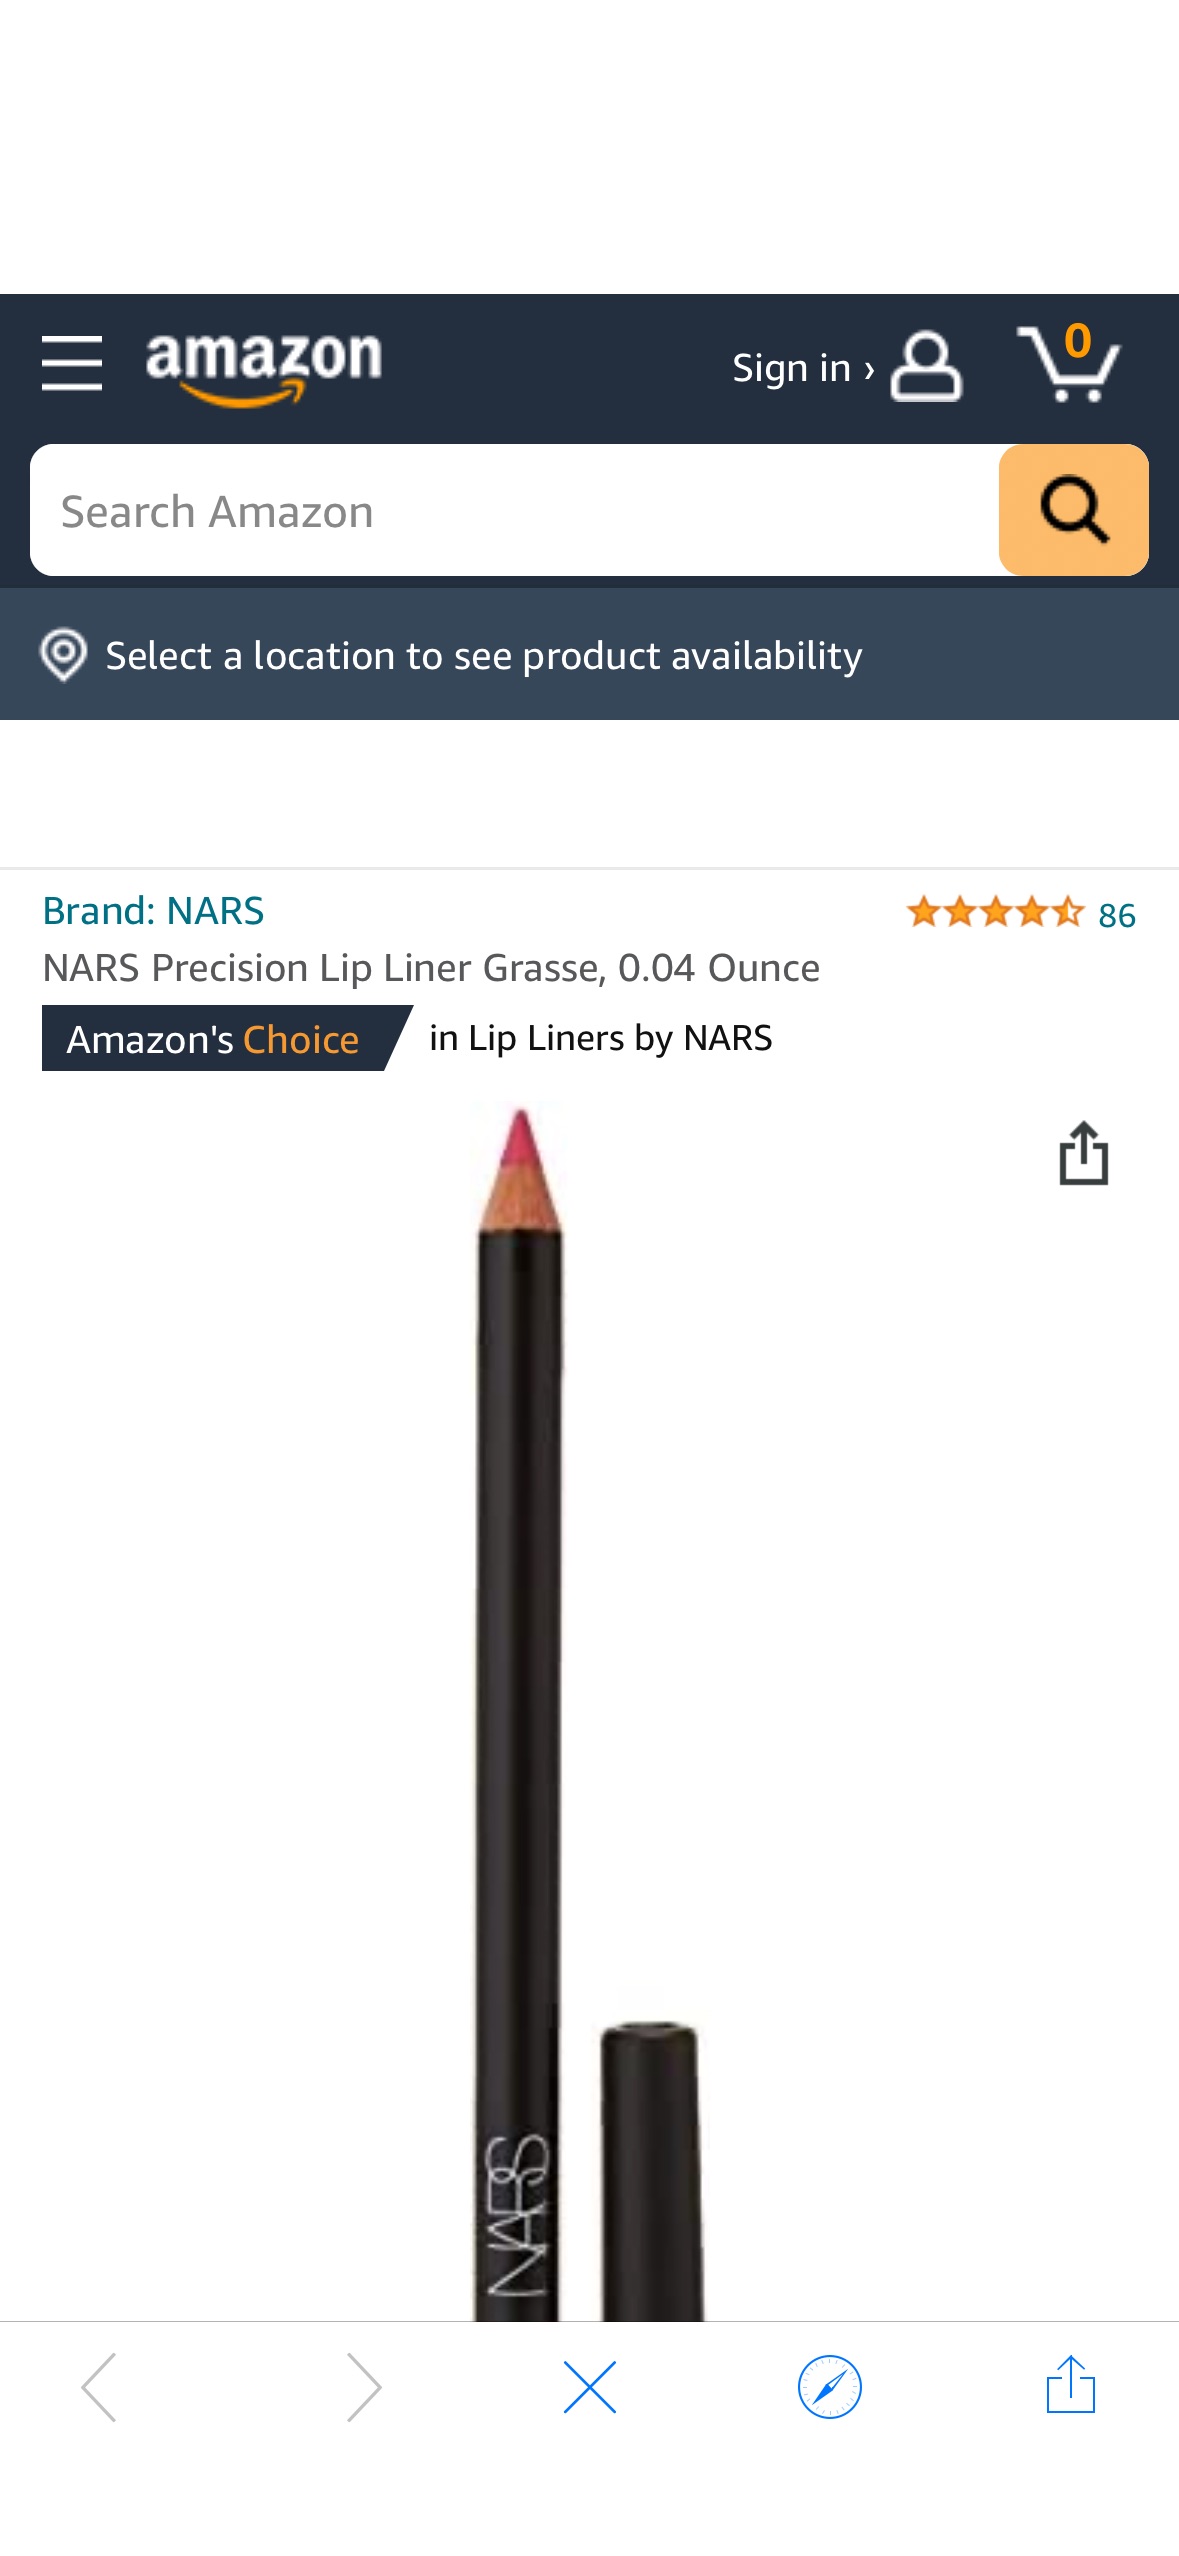 Amazon.com : NARS Precision Lip Liner Grasse, 0.04 Ounce : Beauty & Personal Care唇线笔